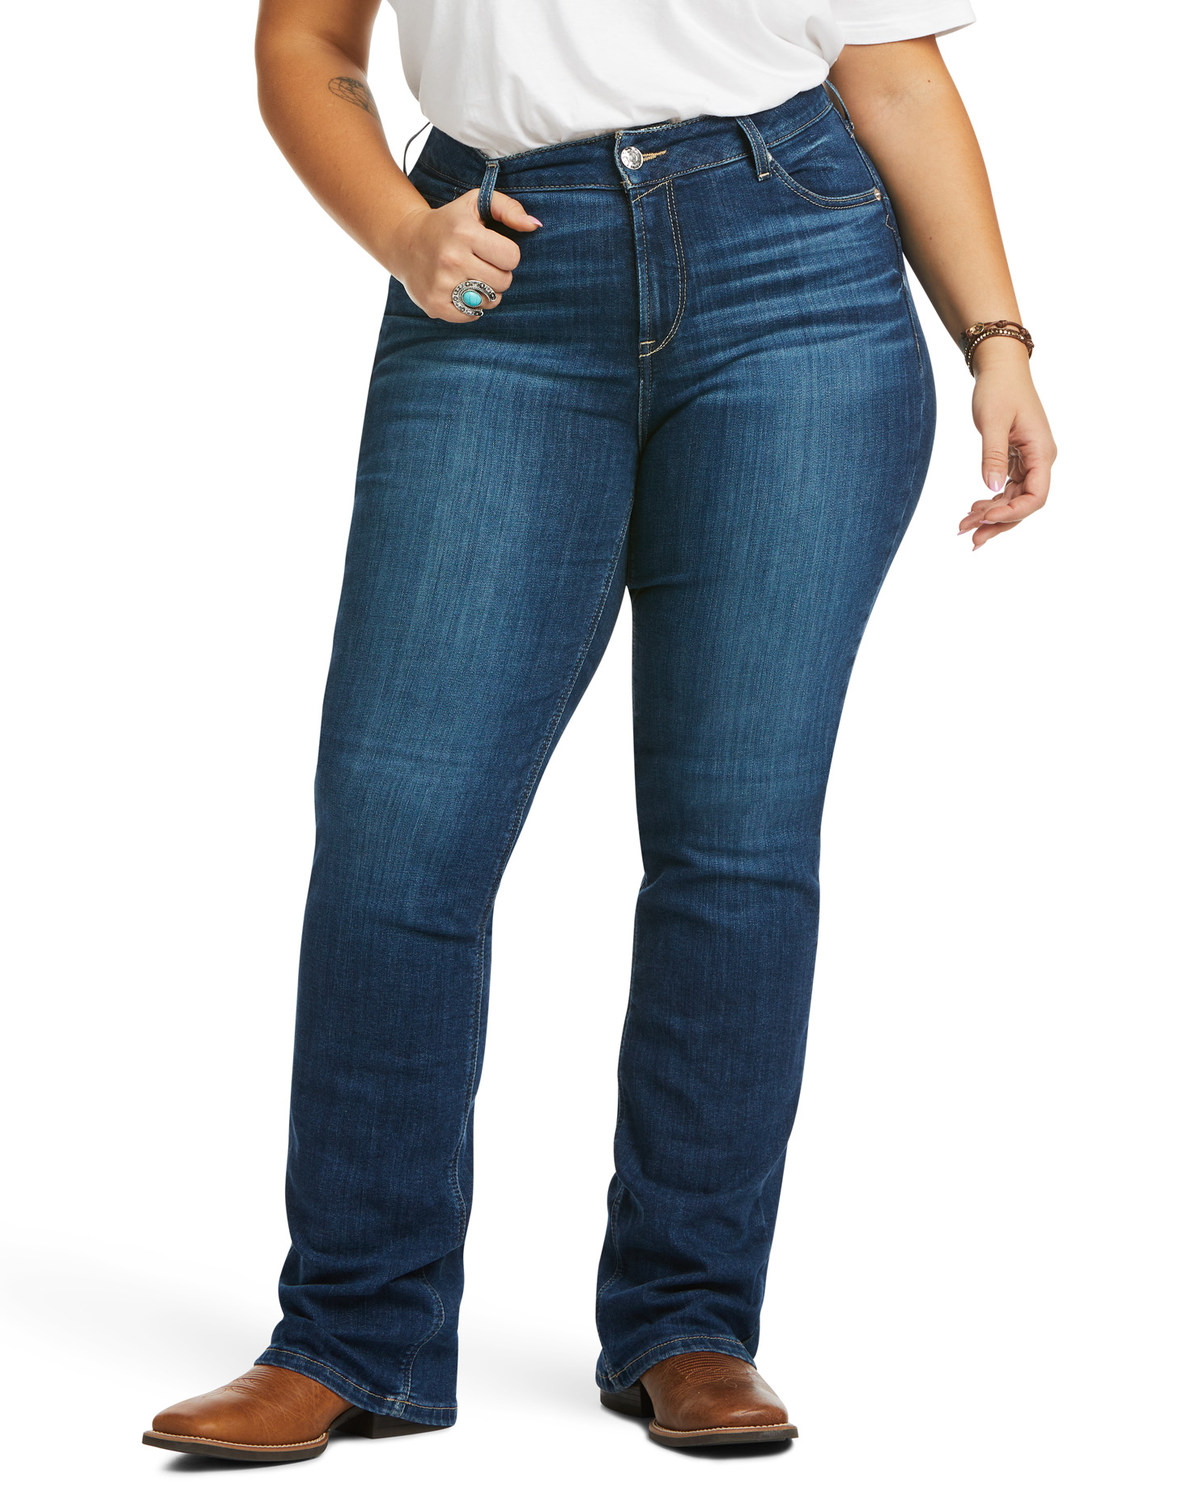 Ariat Women's R.E.A.L Perfect Rise Stretch Abby Straight Mackenzie Jeans